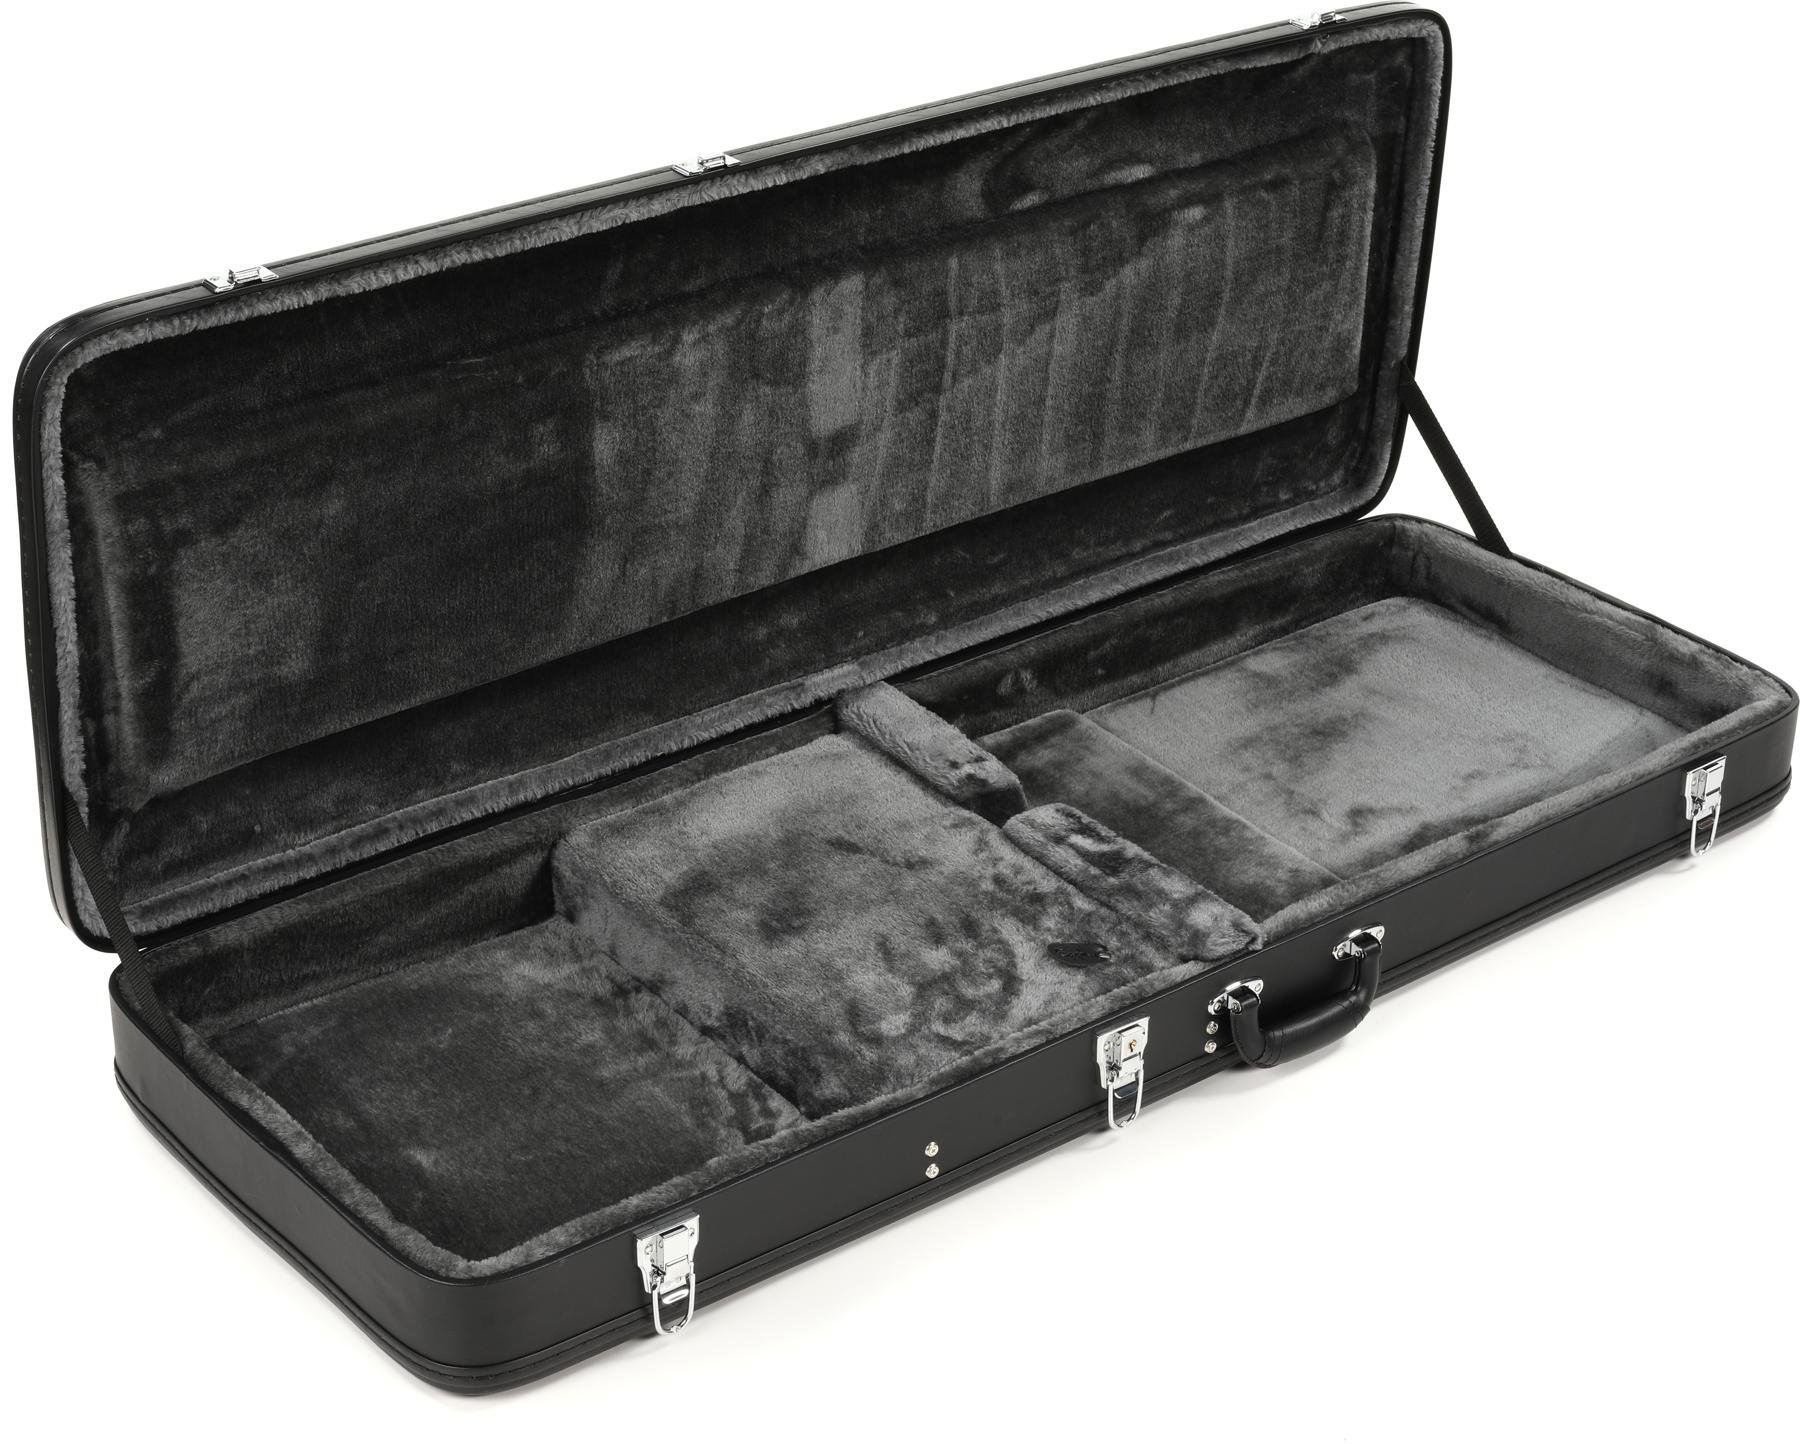 Epiphone Expl2 Hardshell Guitar Case For Explorer Sweetwater